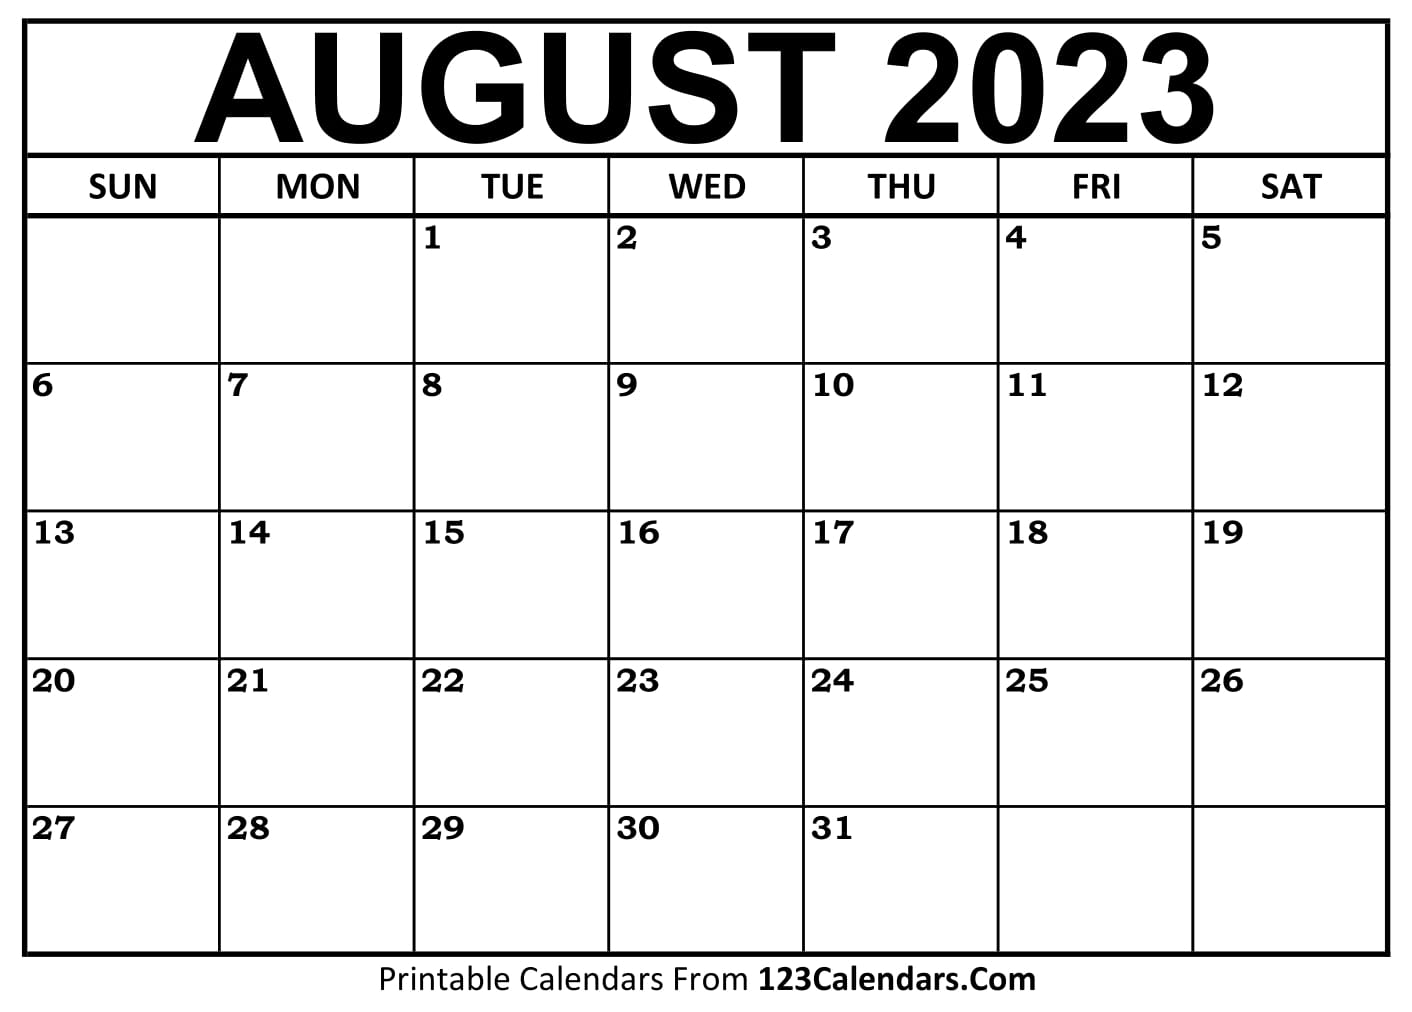 August 2023 Calendar Image Get Latest Map Update